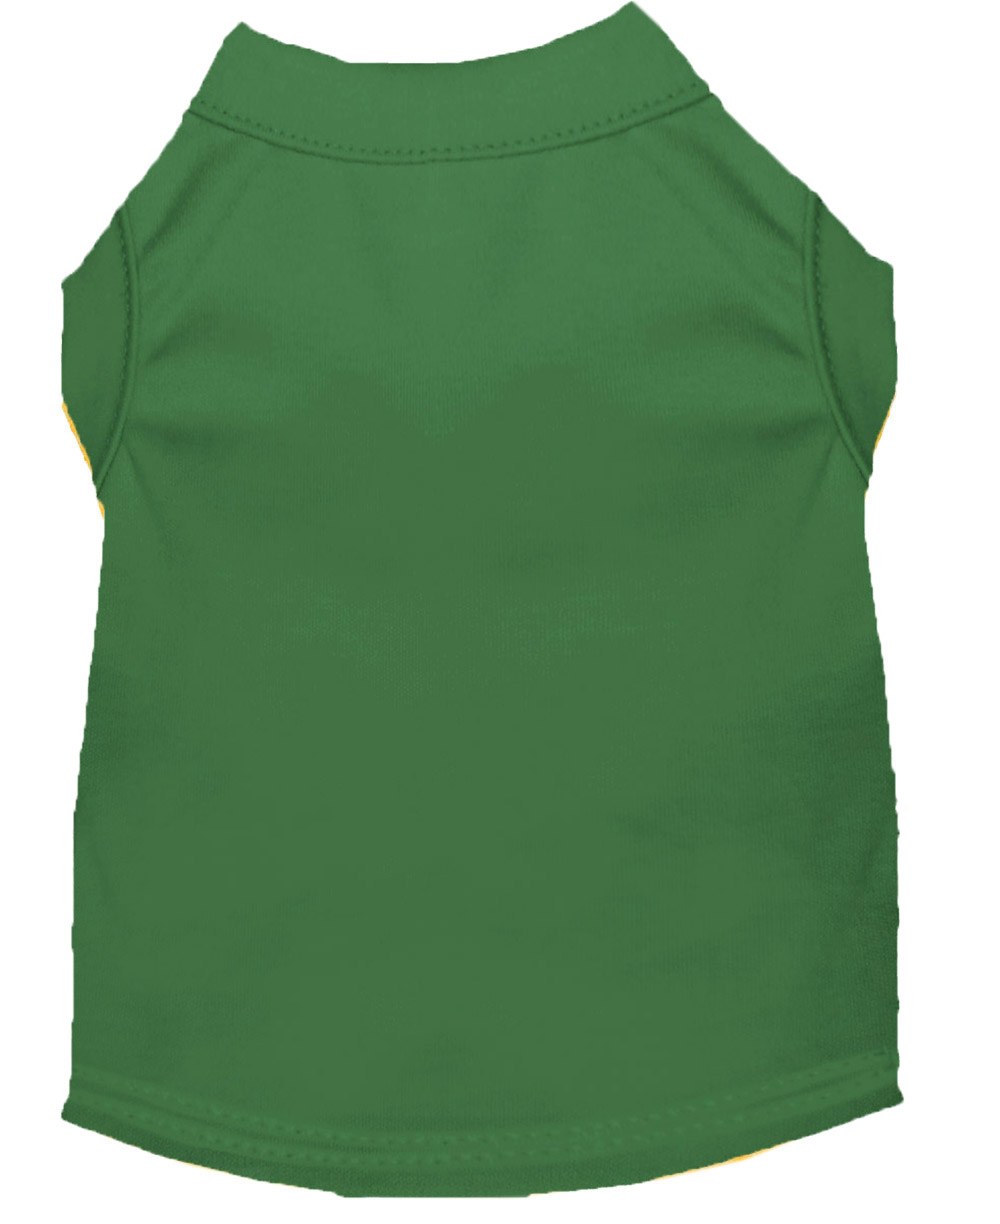 Plain Shirts Emerald Green 4X